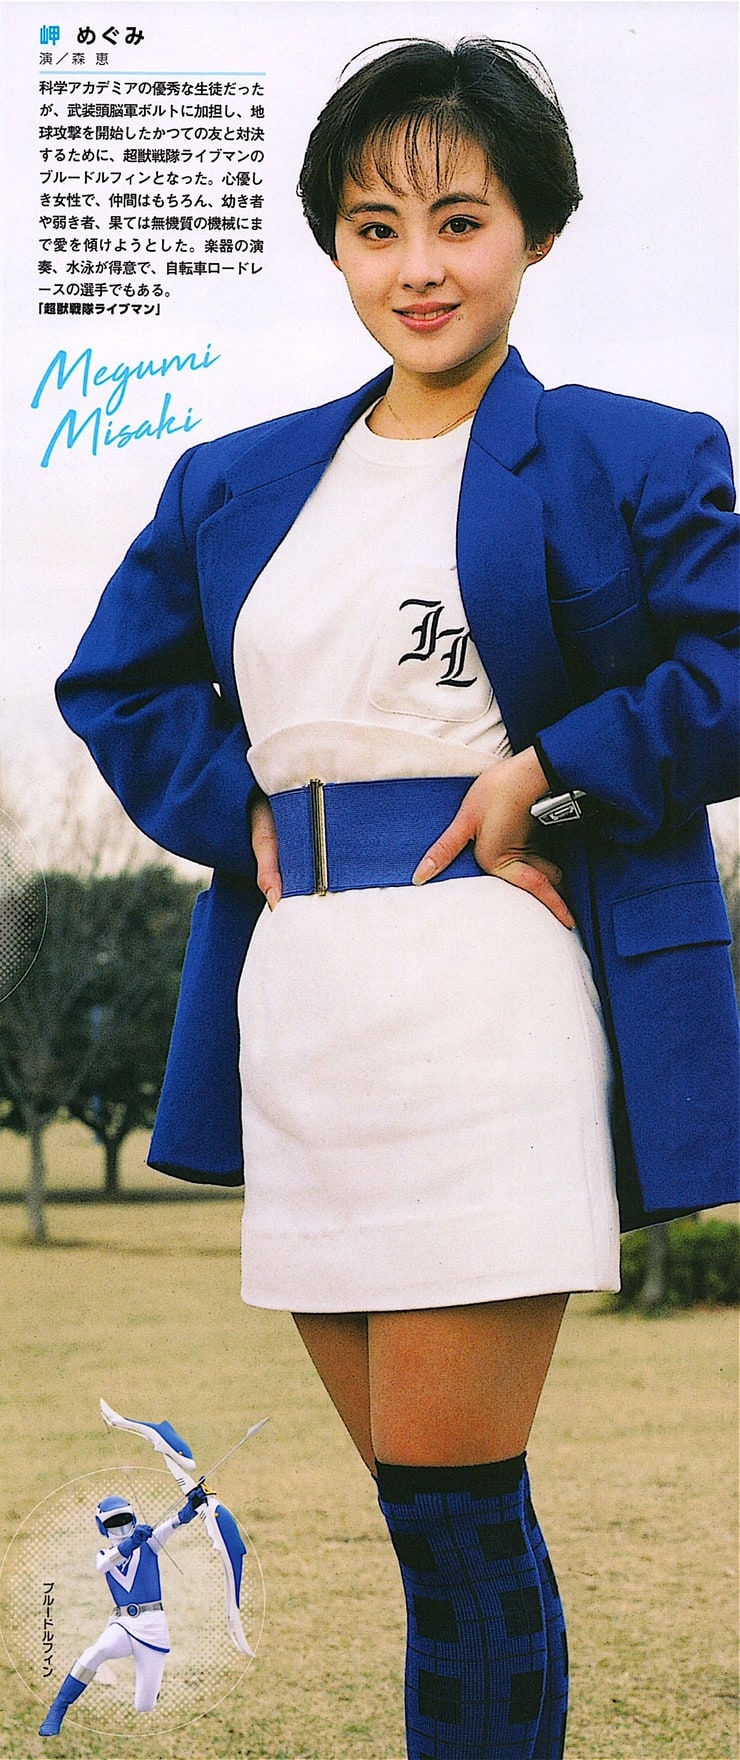 Megumi Misaki